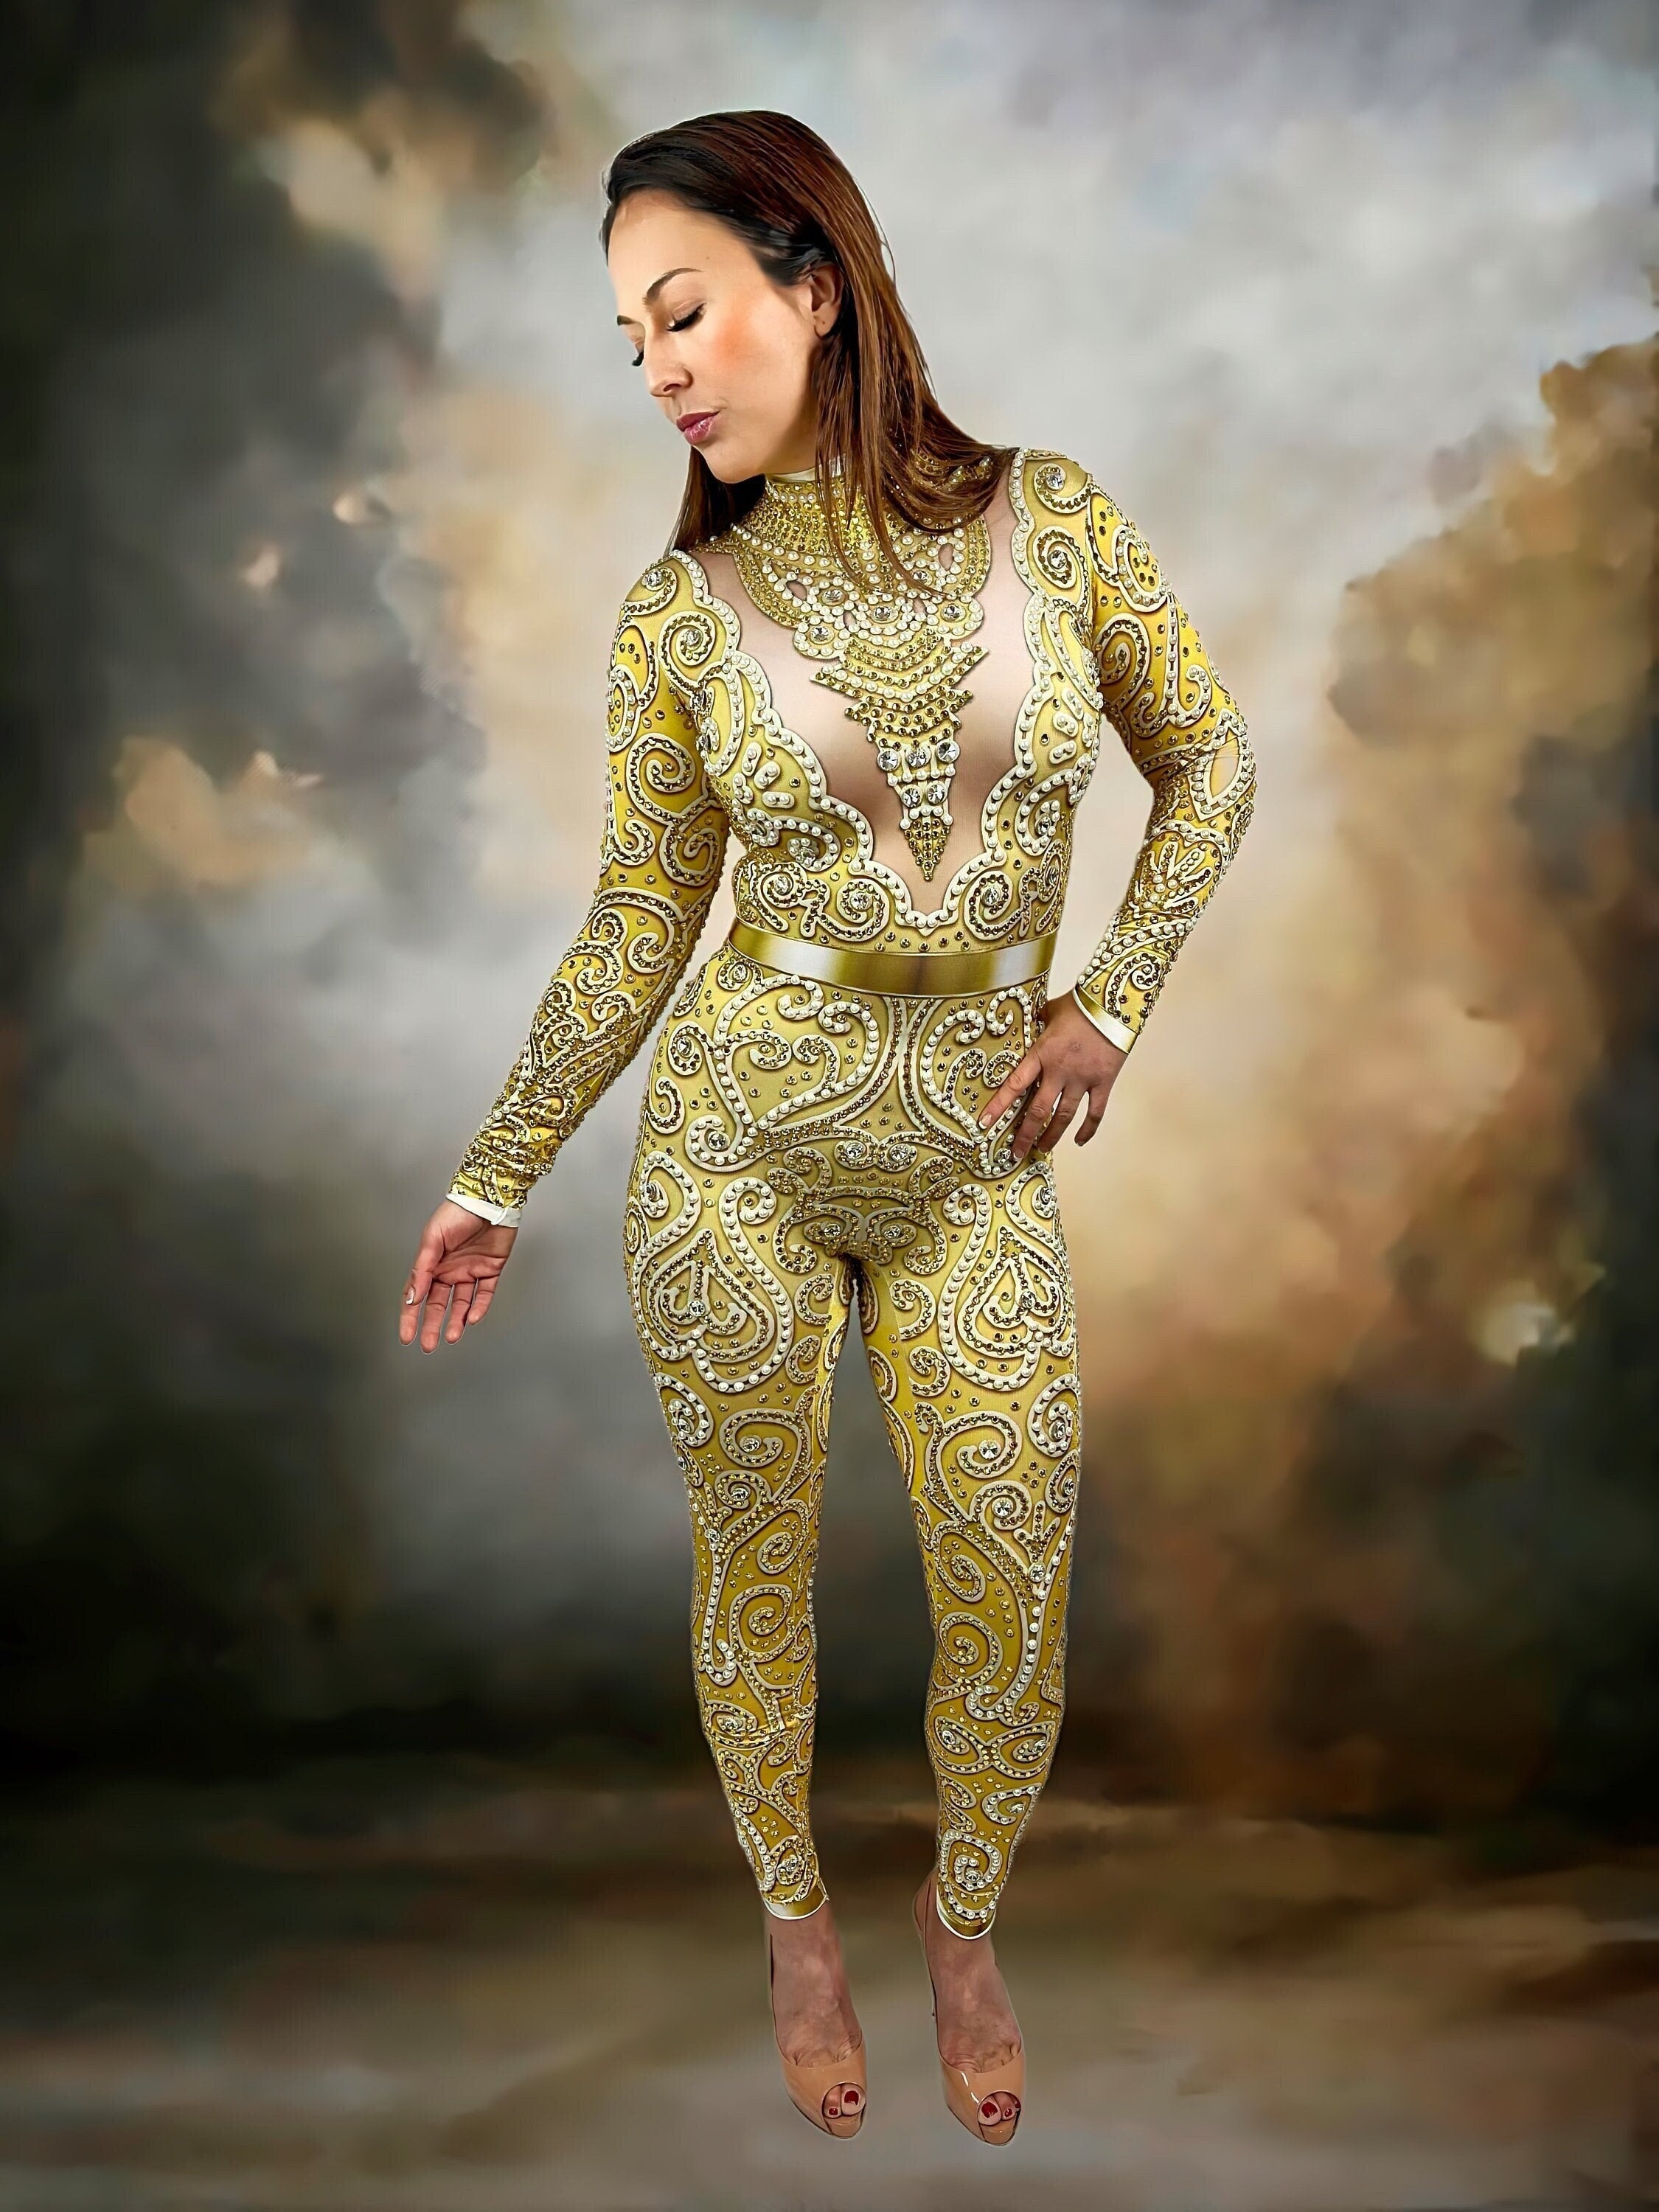 Venus Rhinestone Luxury Bodysuit / Gold Pearl Diamond Catsuit Festival Wedding Disco Dance Crystal Burning Man Performer Aerial NYE Costume